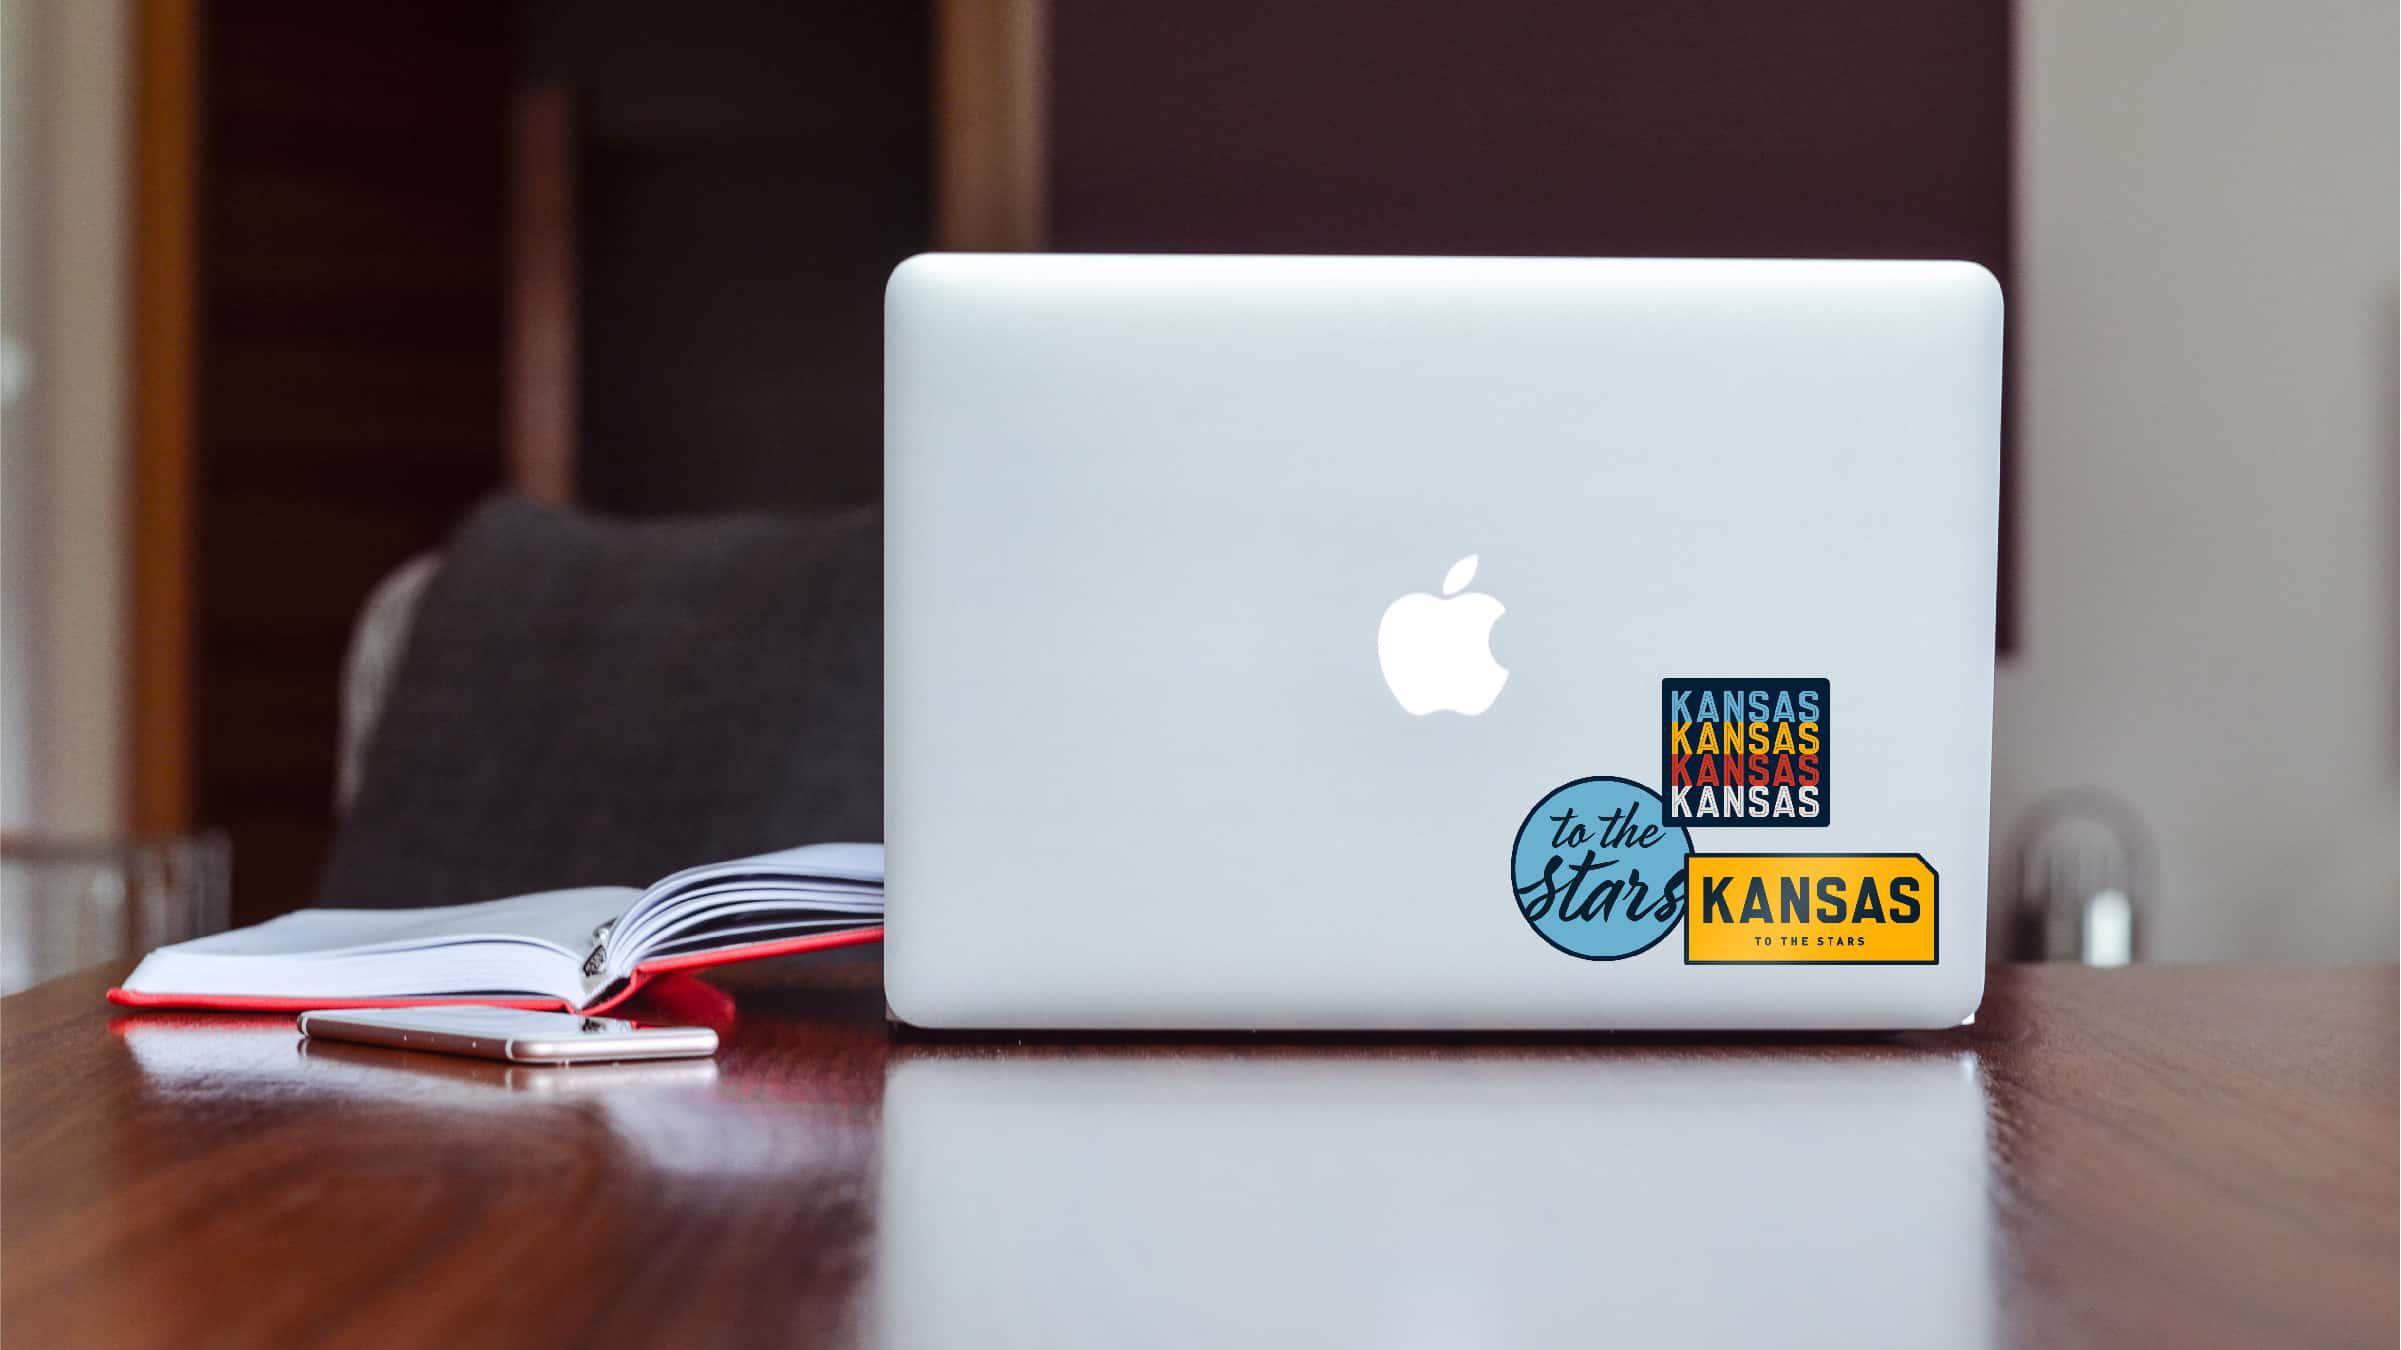 Kansas stickers on a laptop